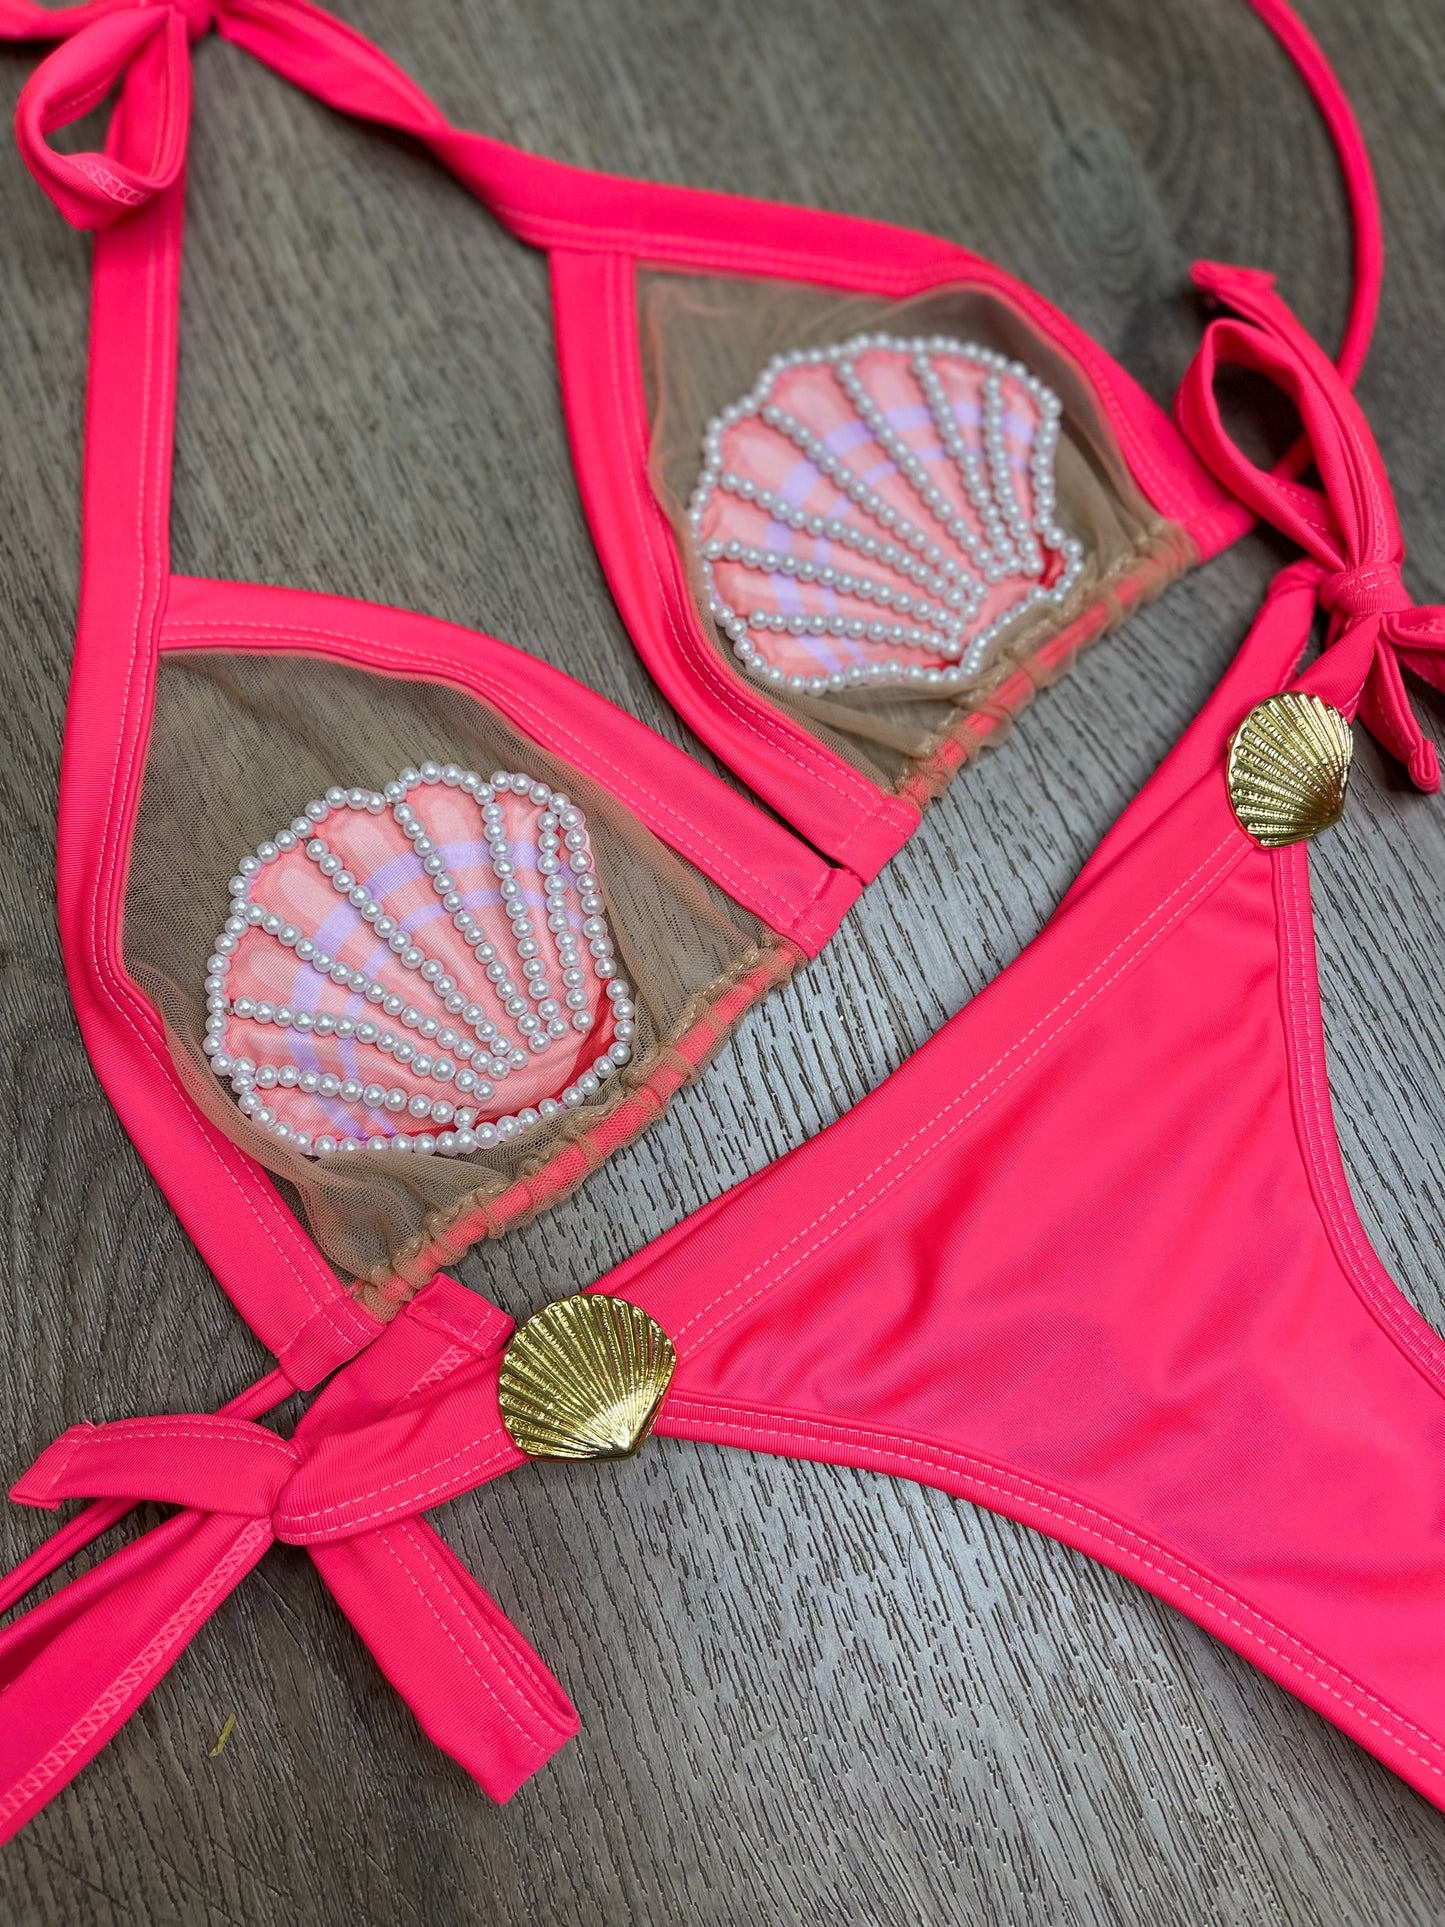 Shell thong bikini set